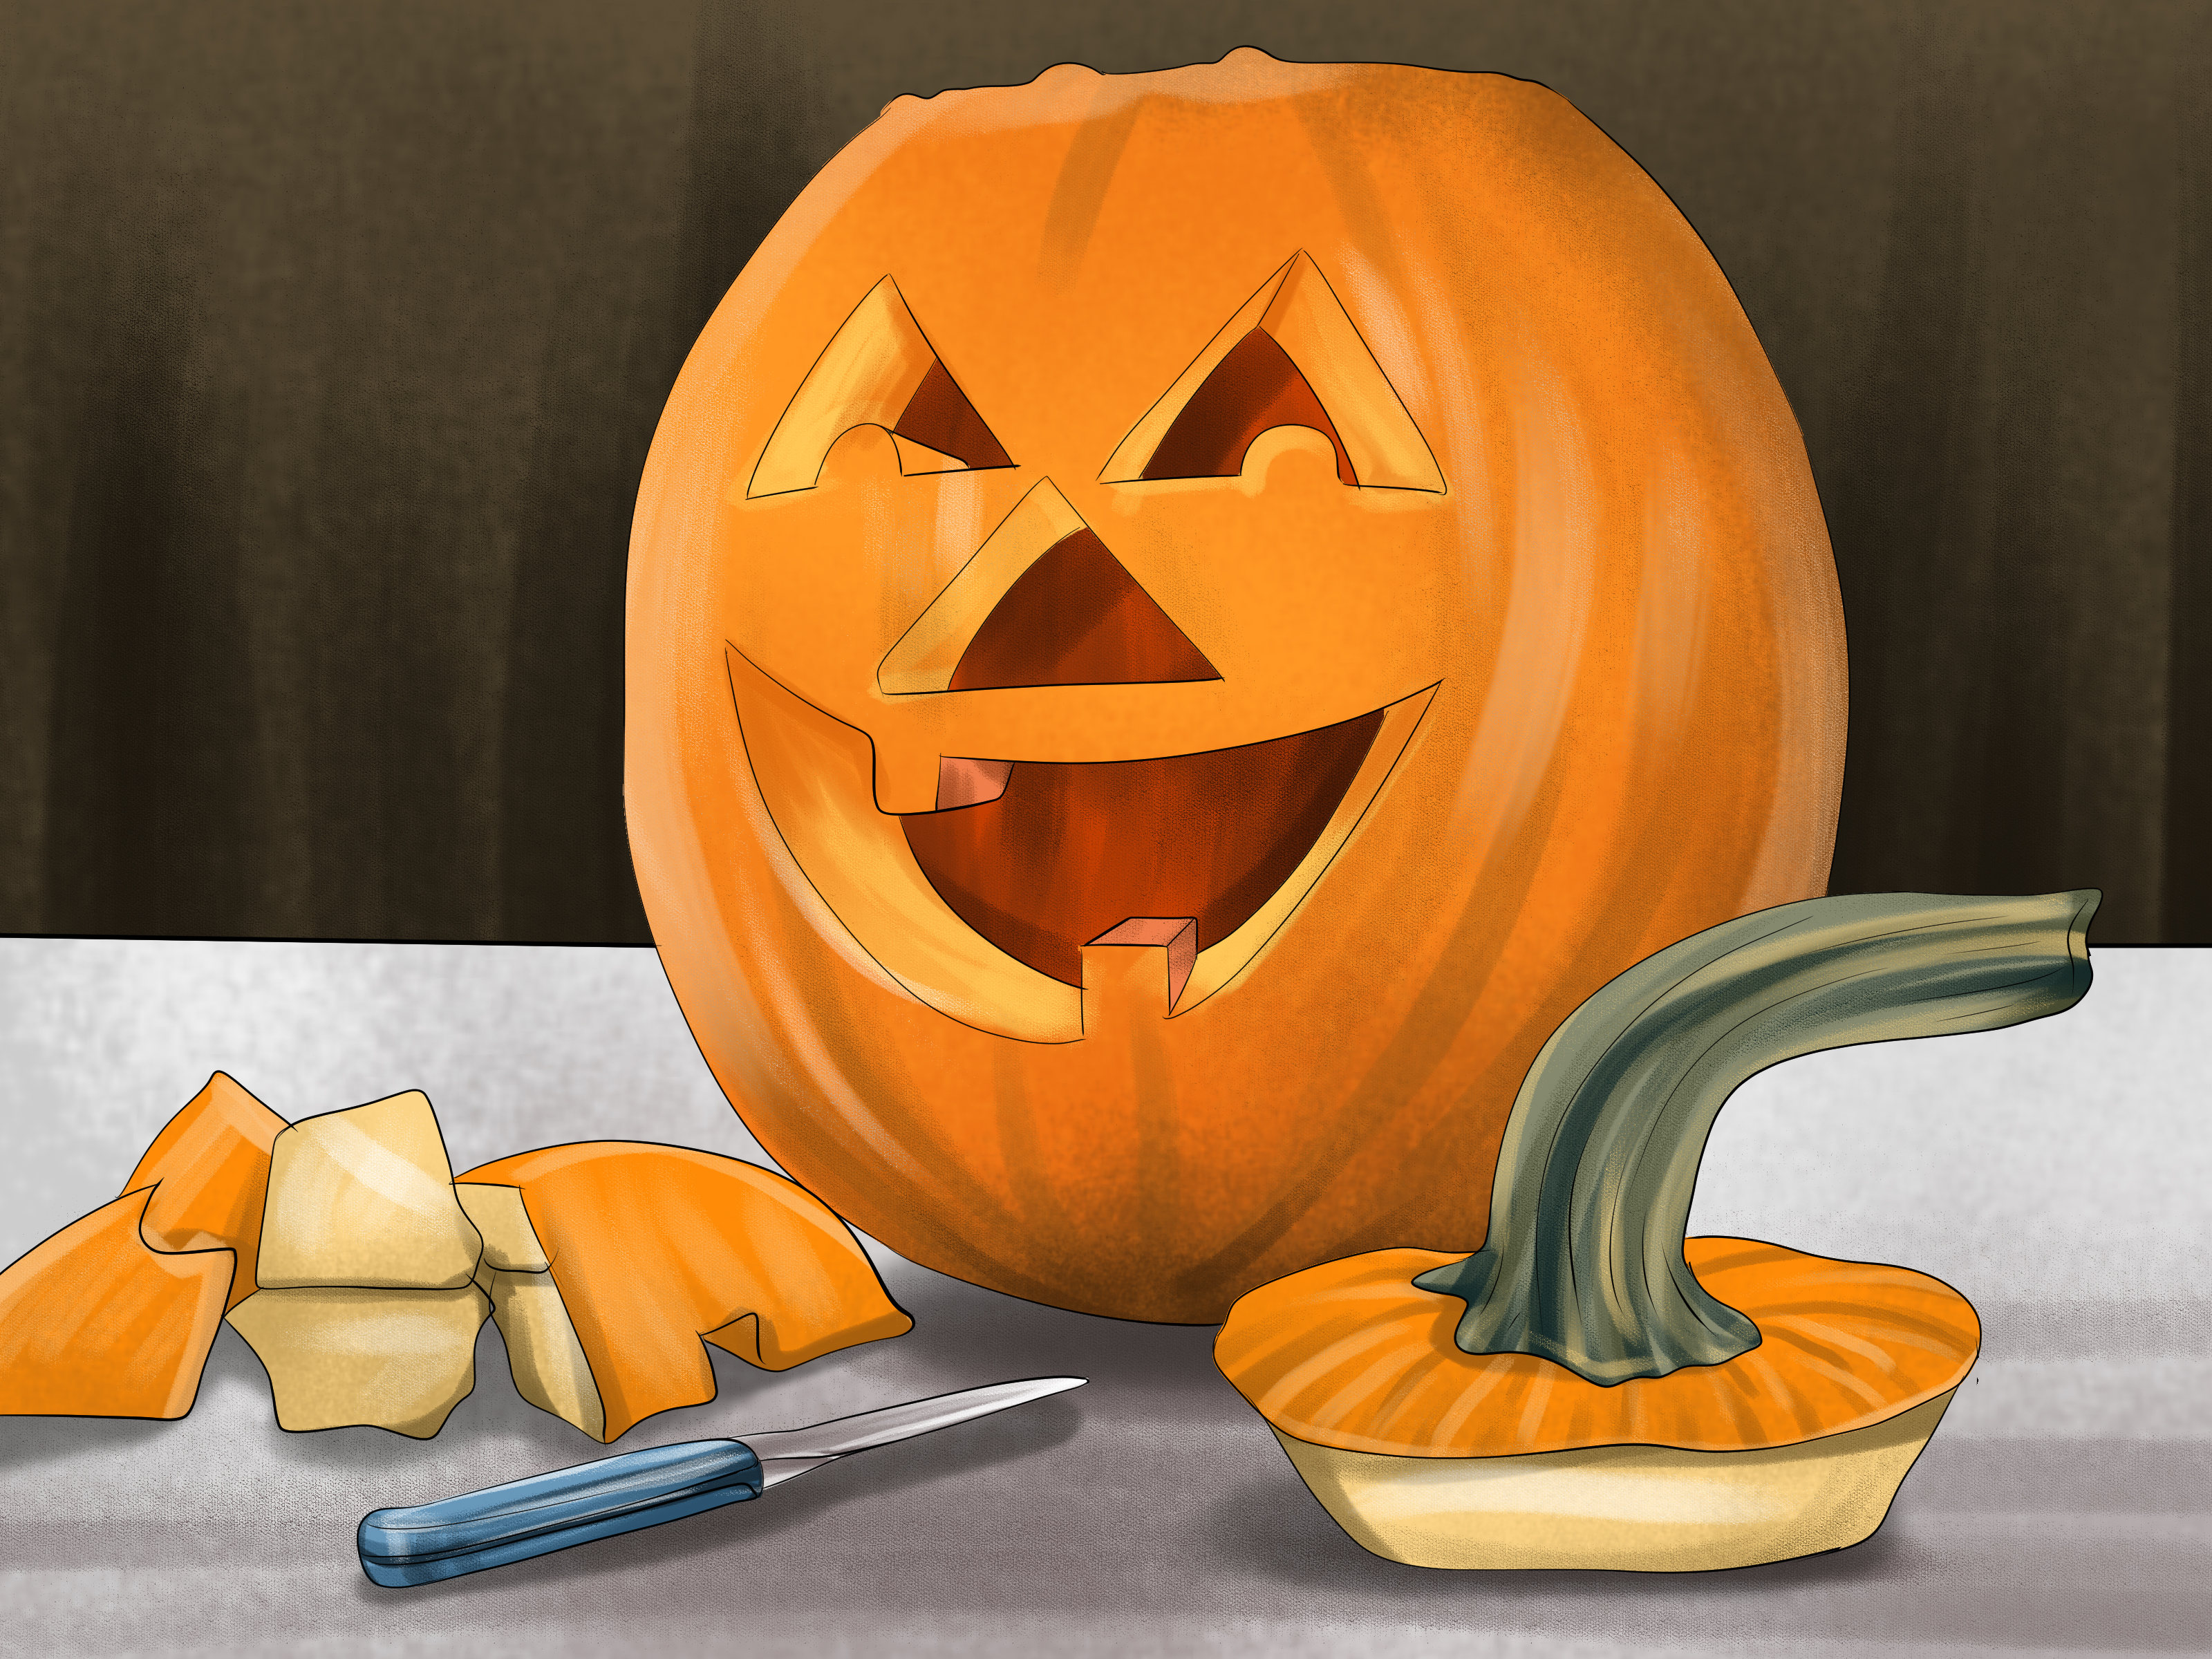 5 Ways to Use Pumpkins - wikiHow